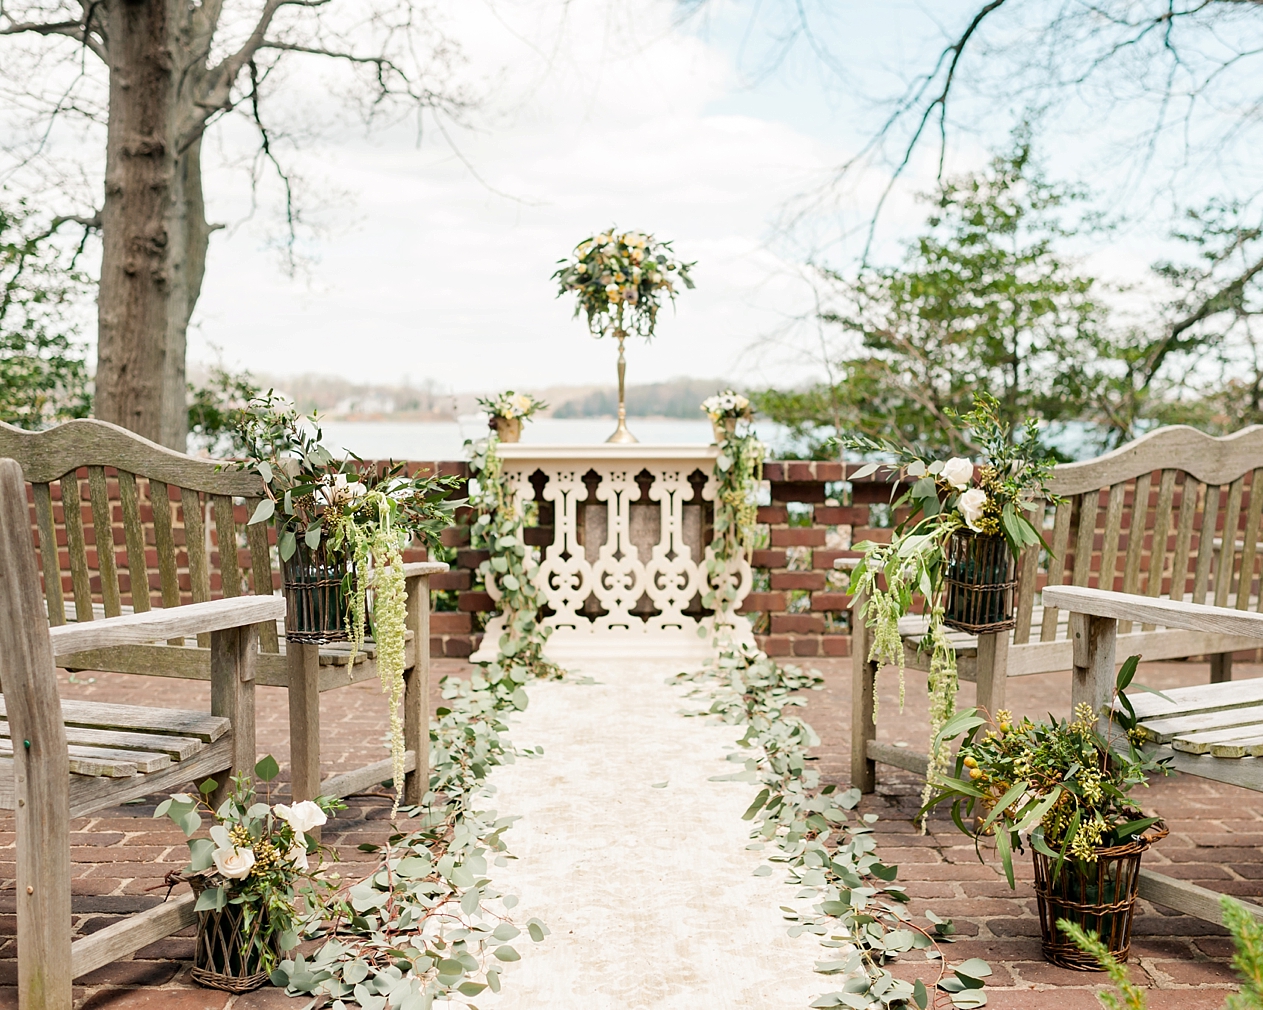 A Tuscan Inspired Springtime Editorial | Historic London Town & Gardens | Annapolis Maryland & East Coast Wedding Photographer Lauren R Swann